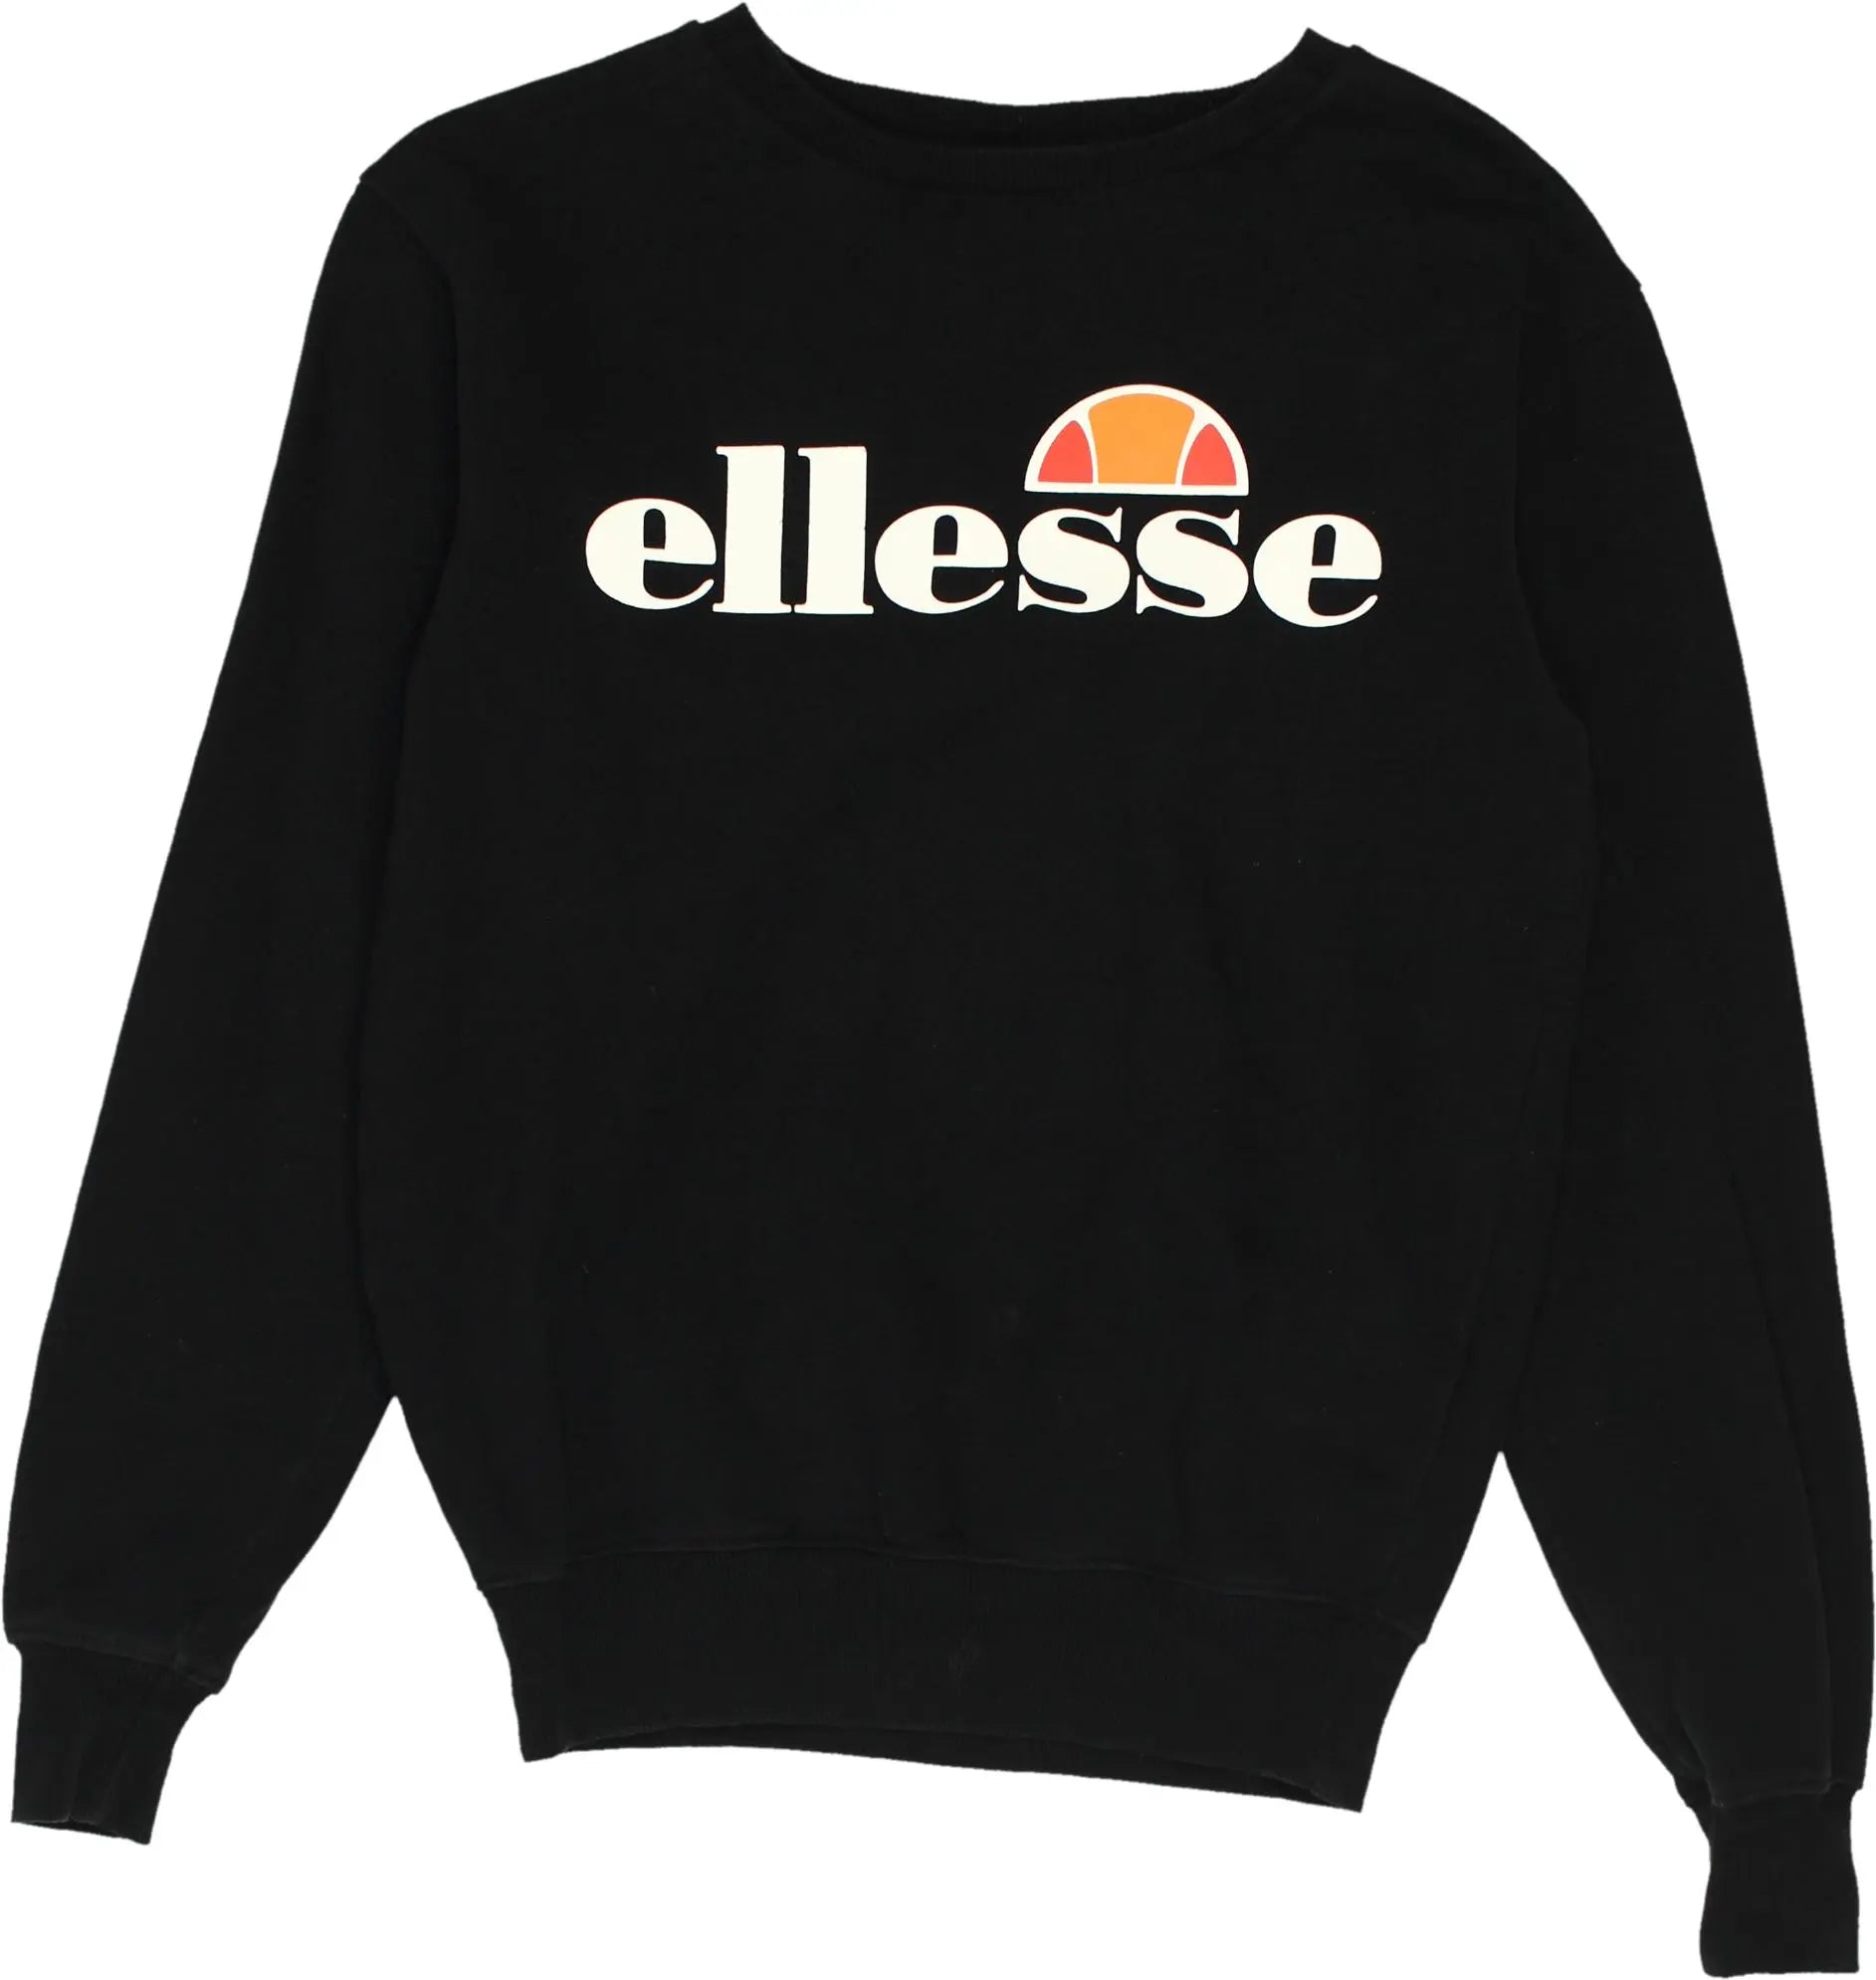 Buy Ellesse Sweater Fleece Jacket Rare Vintage Ellesse Italia by Goldwin  Streetwear Ellesse Casual Hip Hop Jacket TTS Large refer Measurements  Online in India 